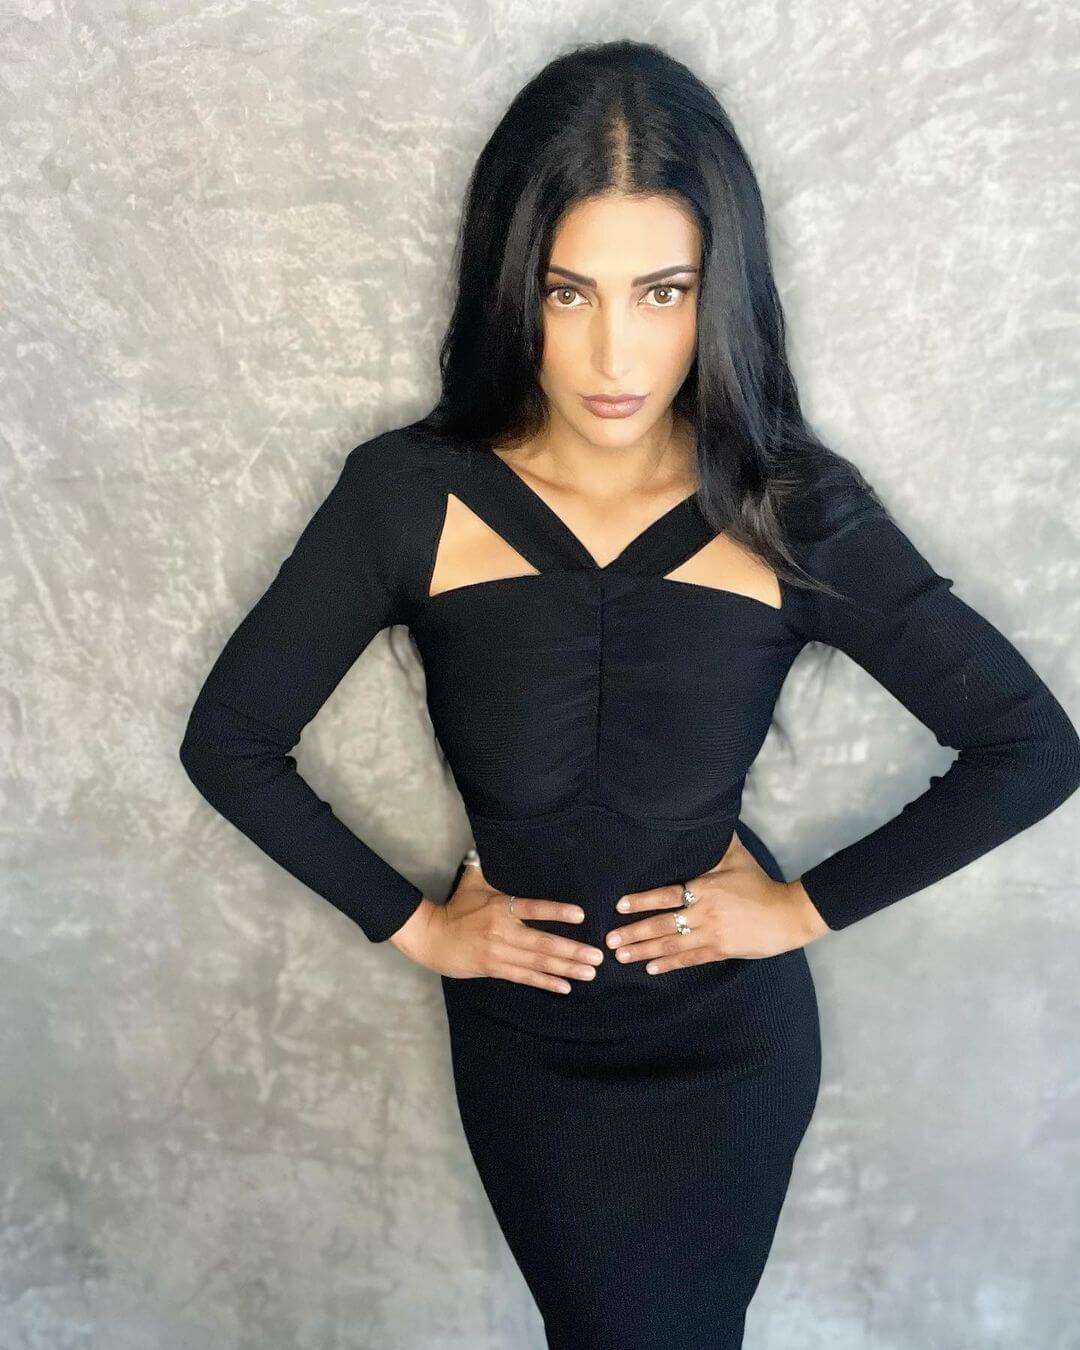 Trendy And Amazing Bollywood Fashion Sassy Black, Shruti Haasan In A Black One-Piece Dress